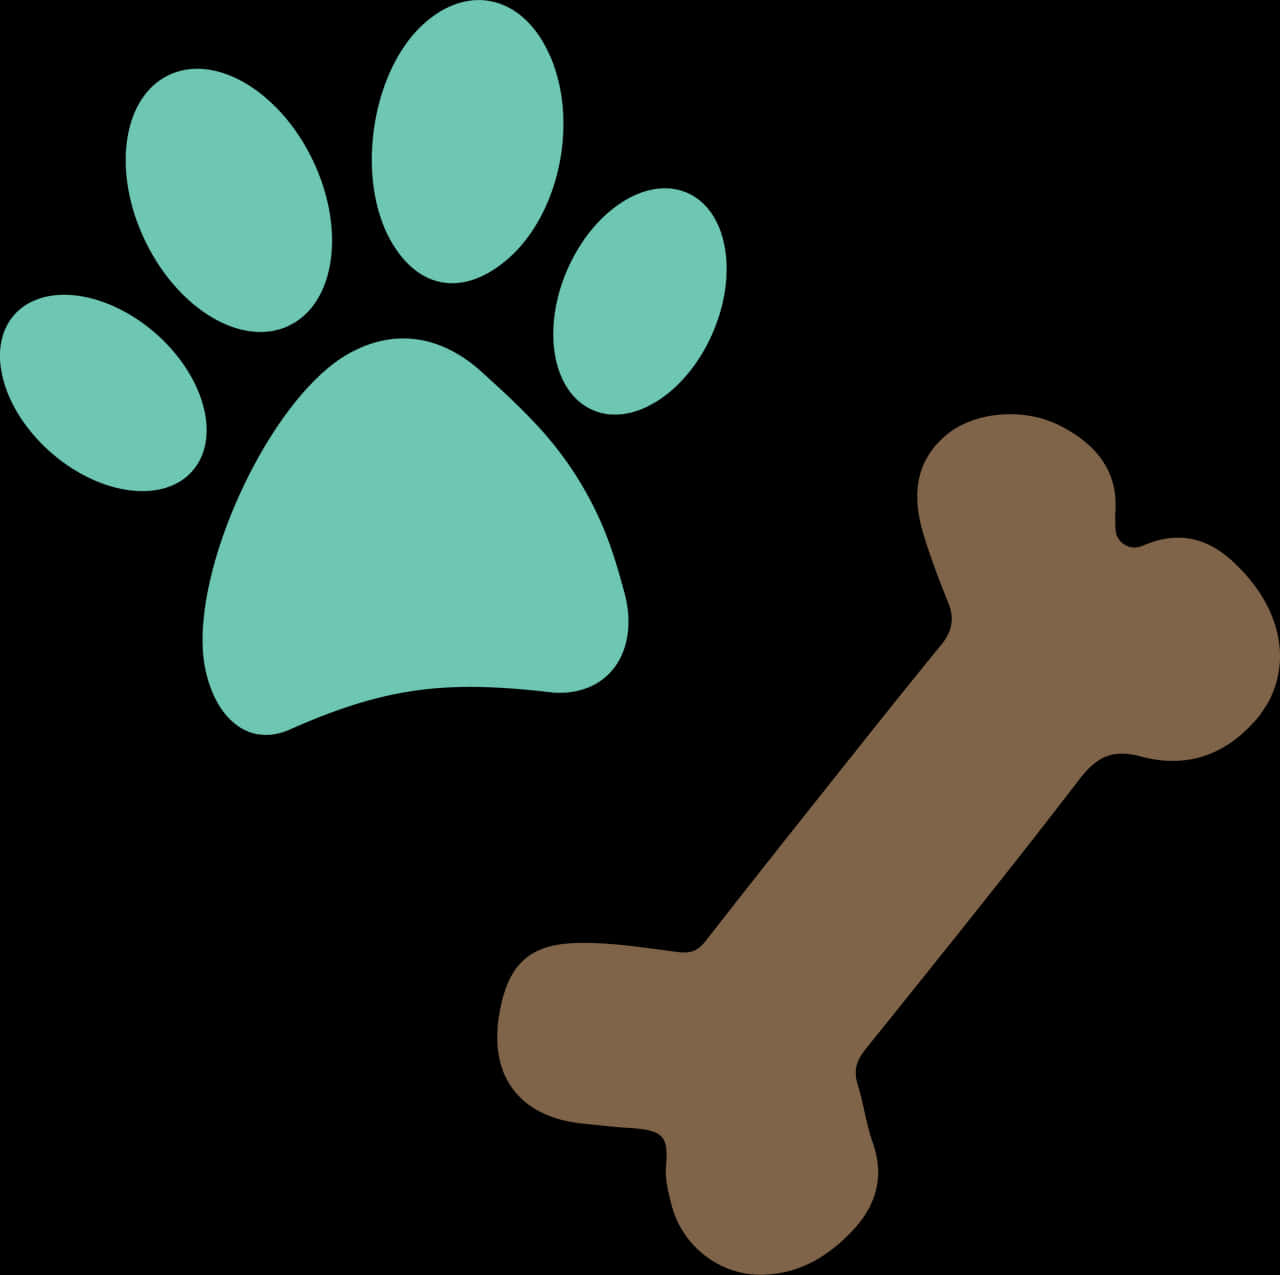 Dog Pawand Bone Graphic PNG image